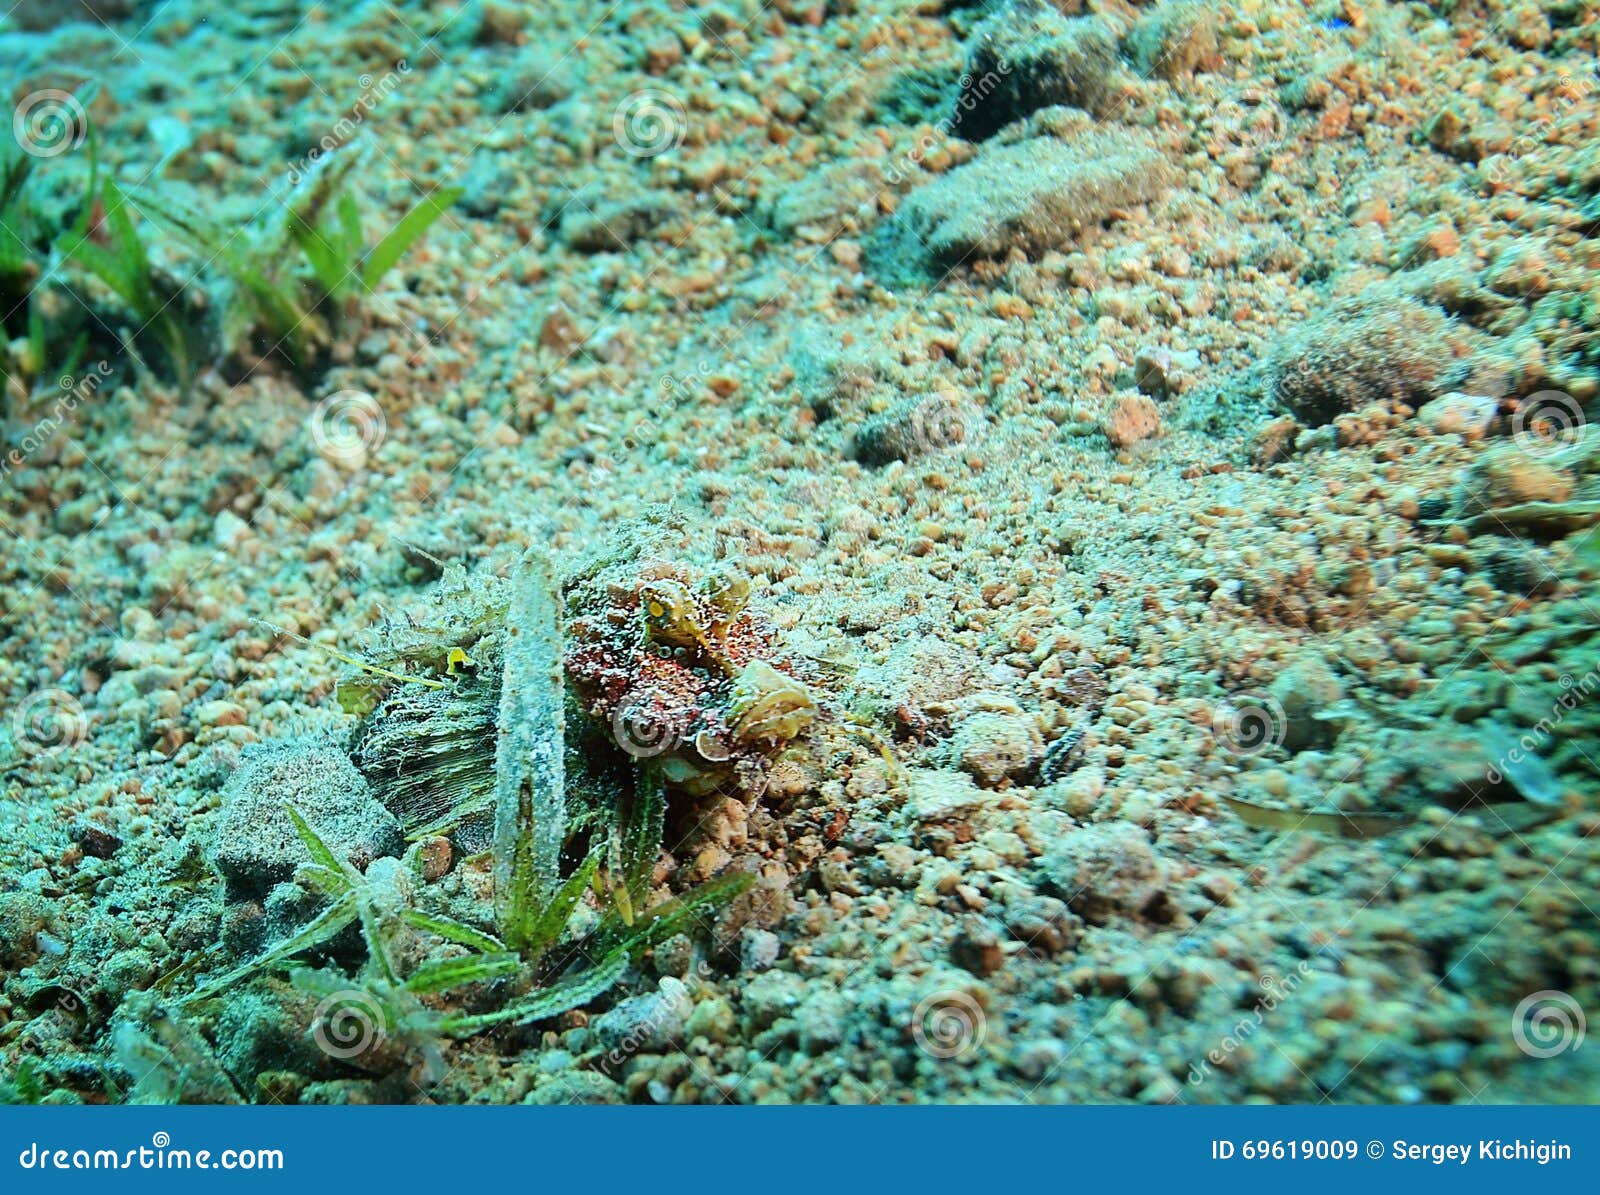 How Toxic is the Stonefish? - Ocean Conservancy